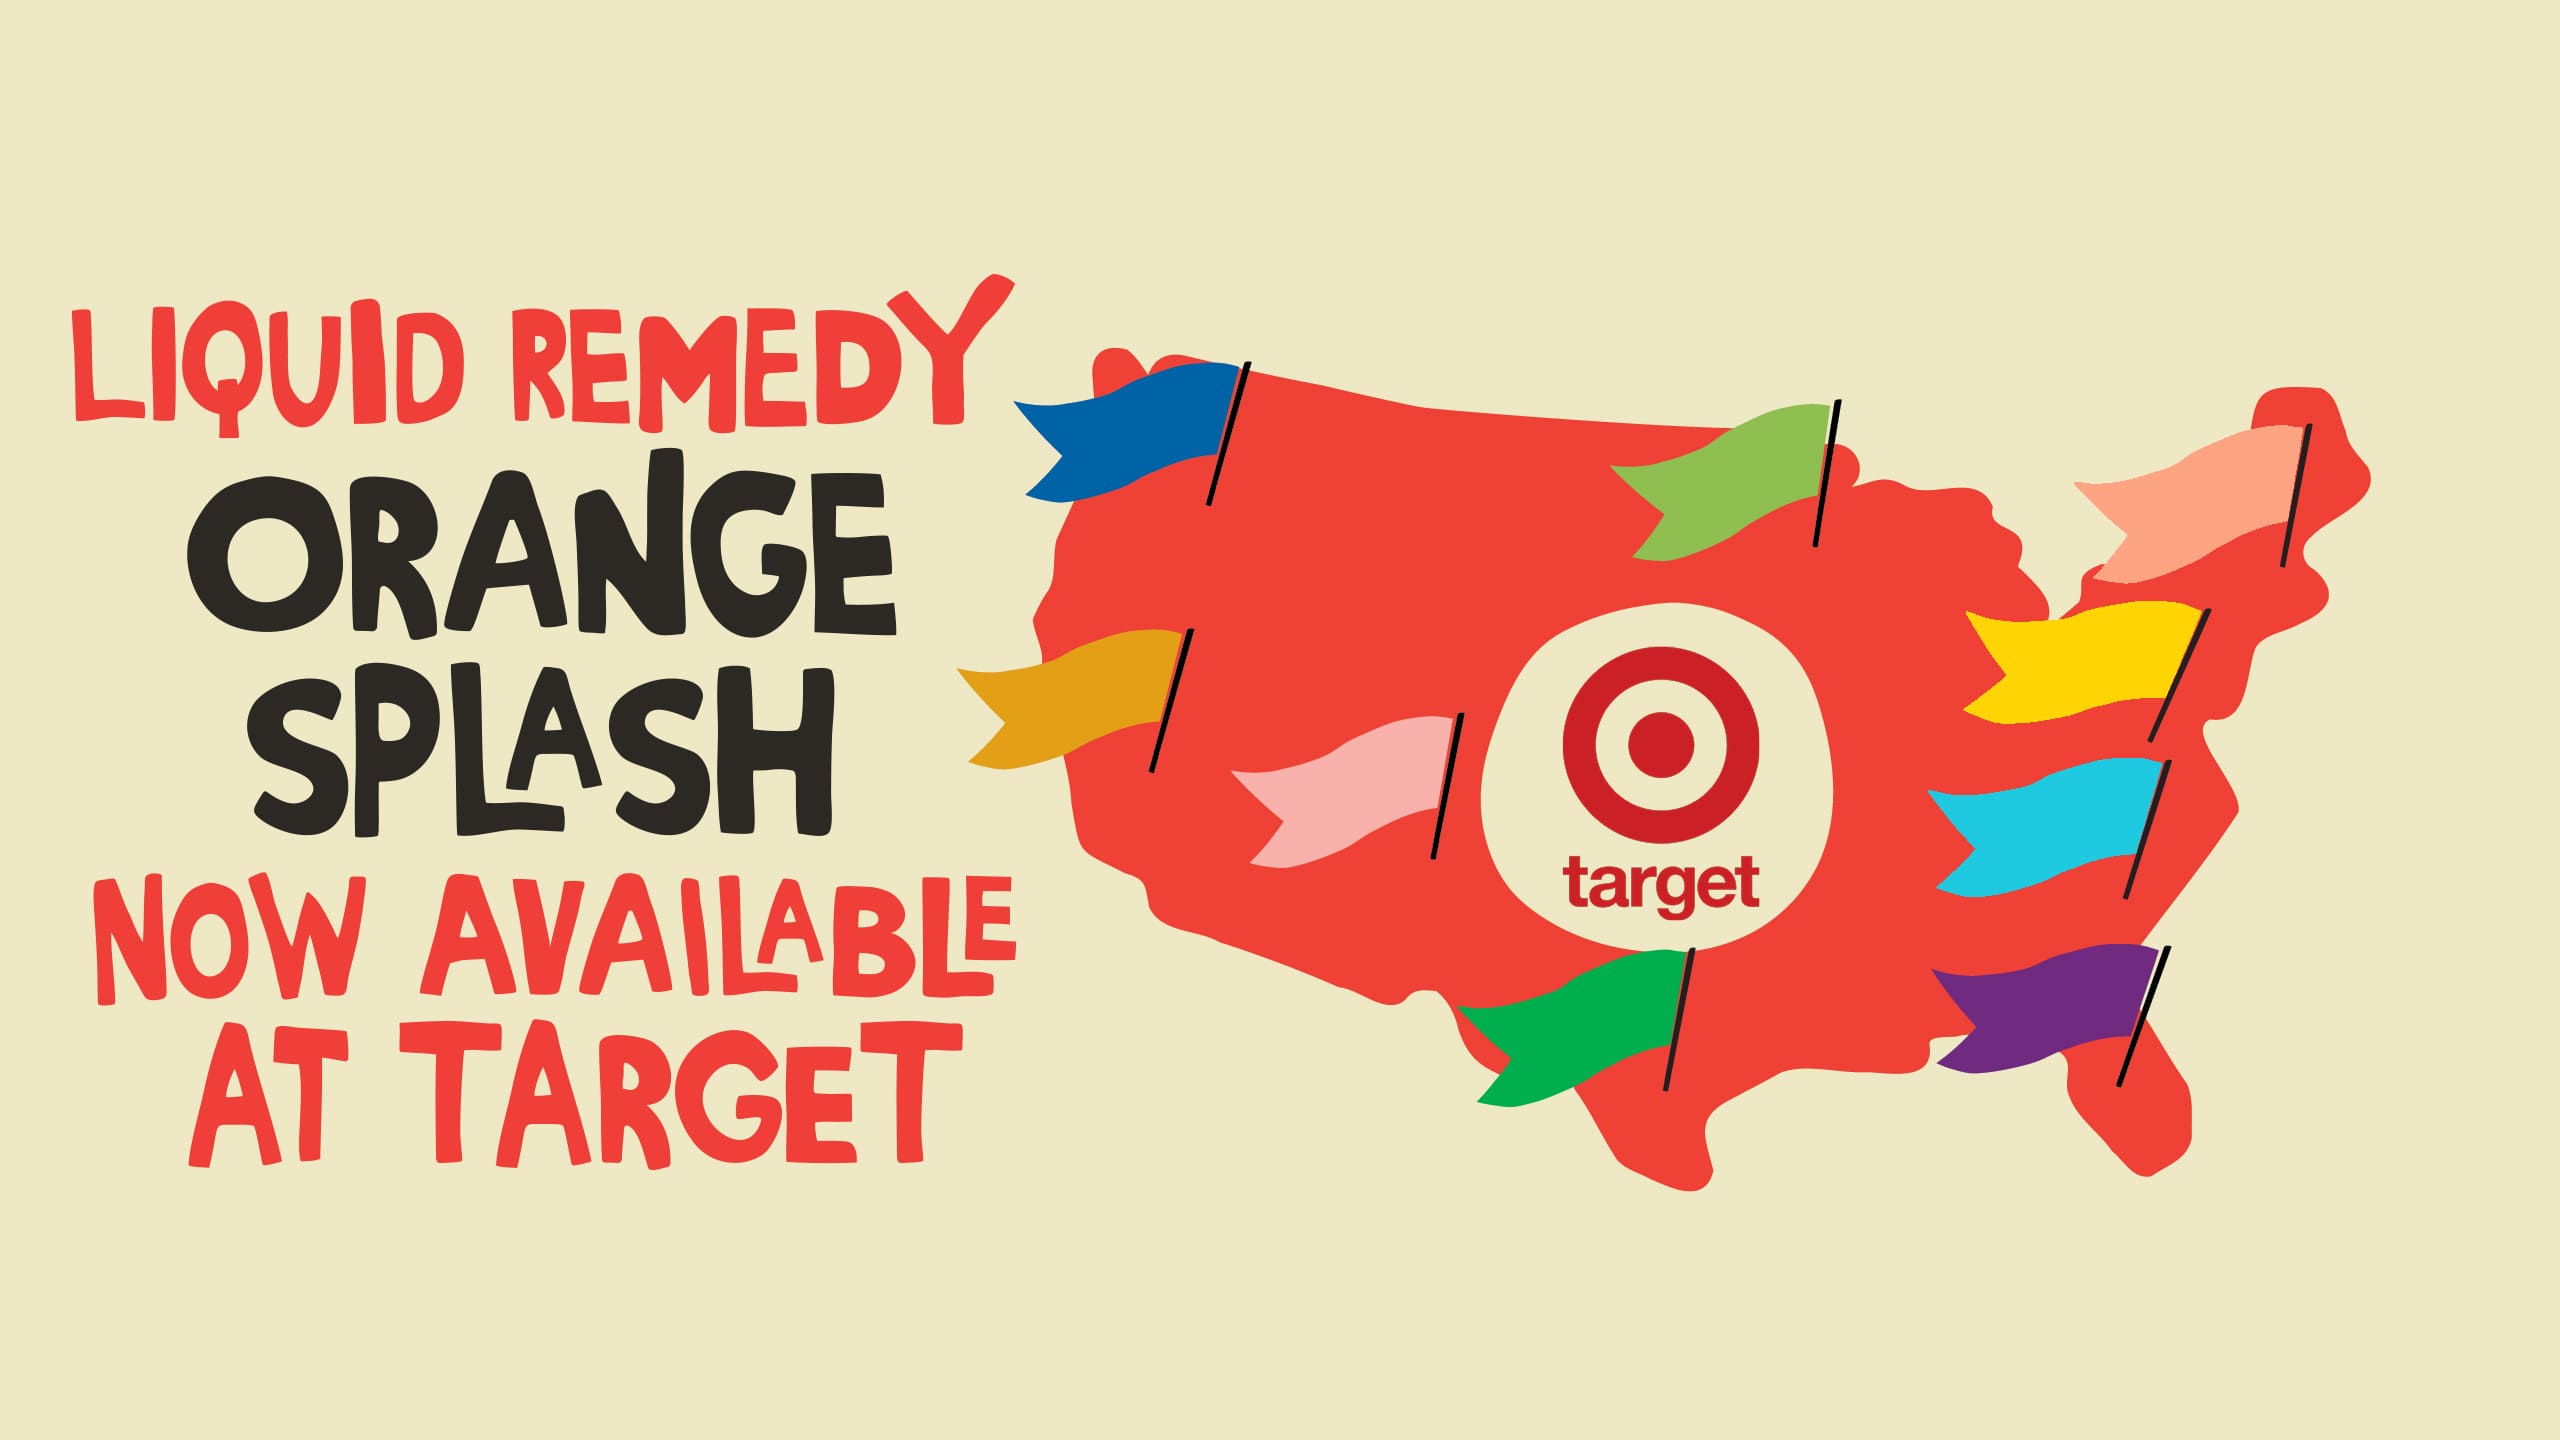 Liquid Remedy Orange Splash Now Available at Target